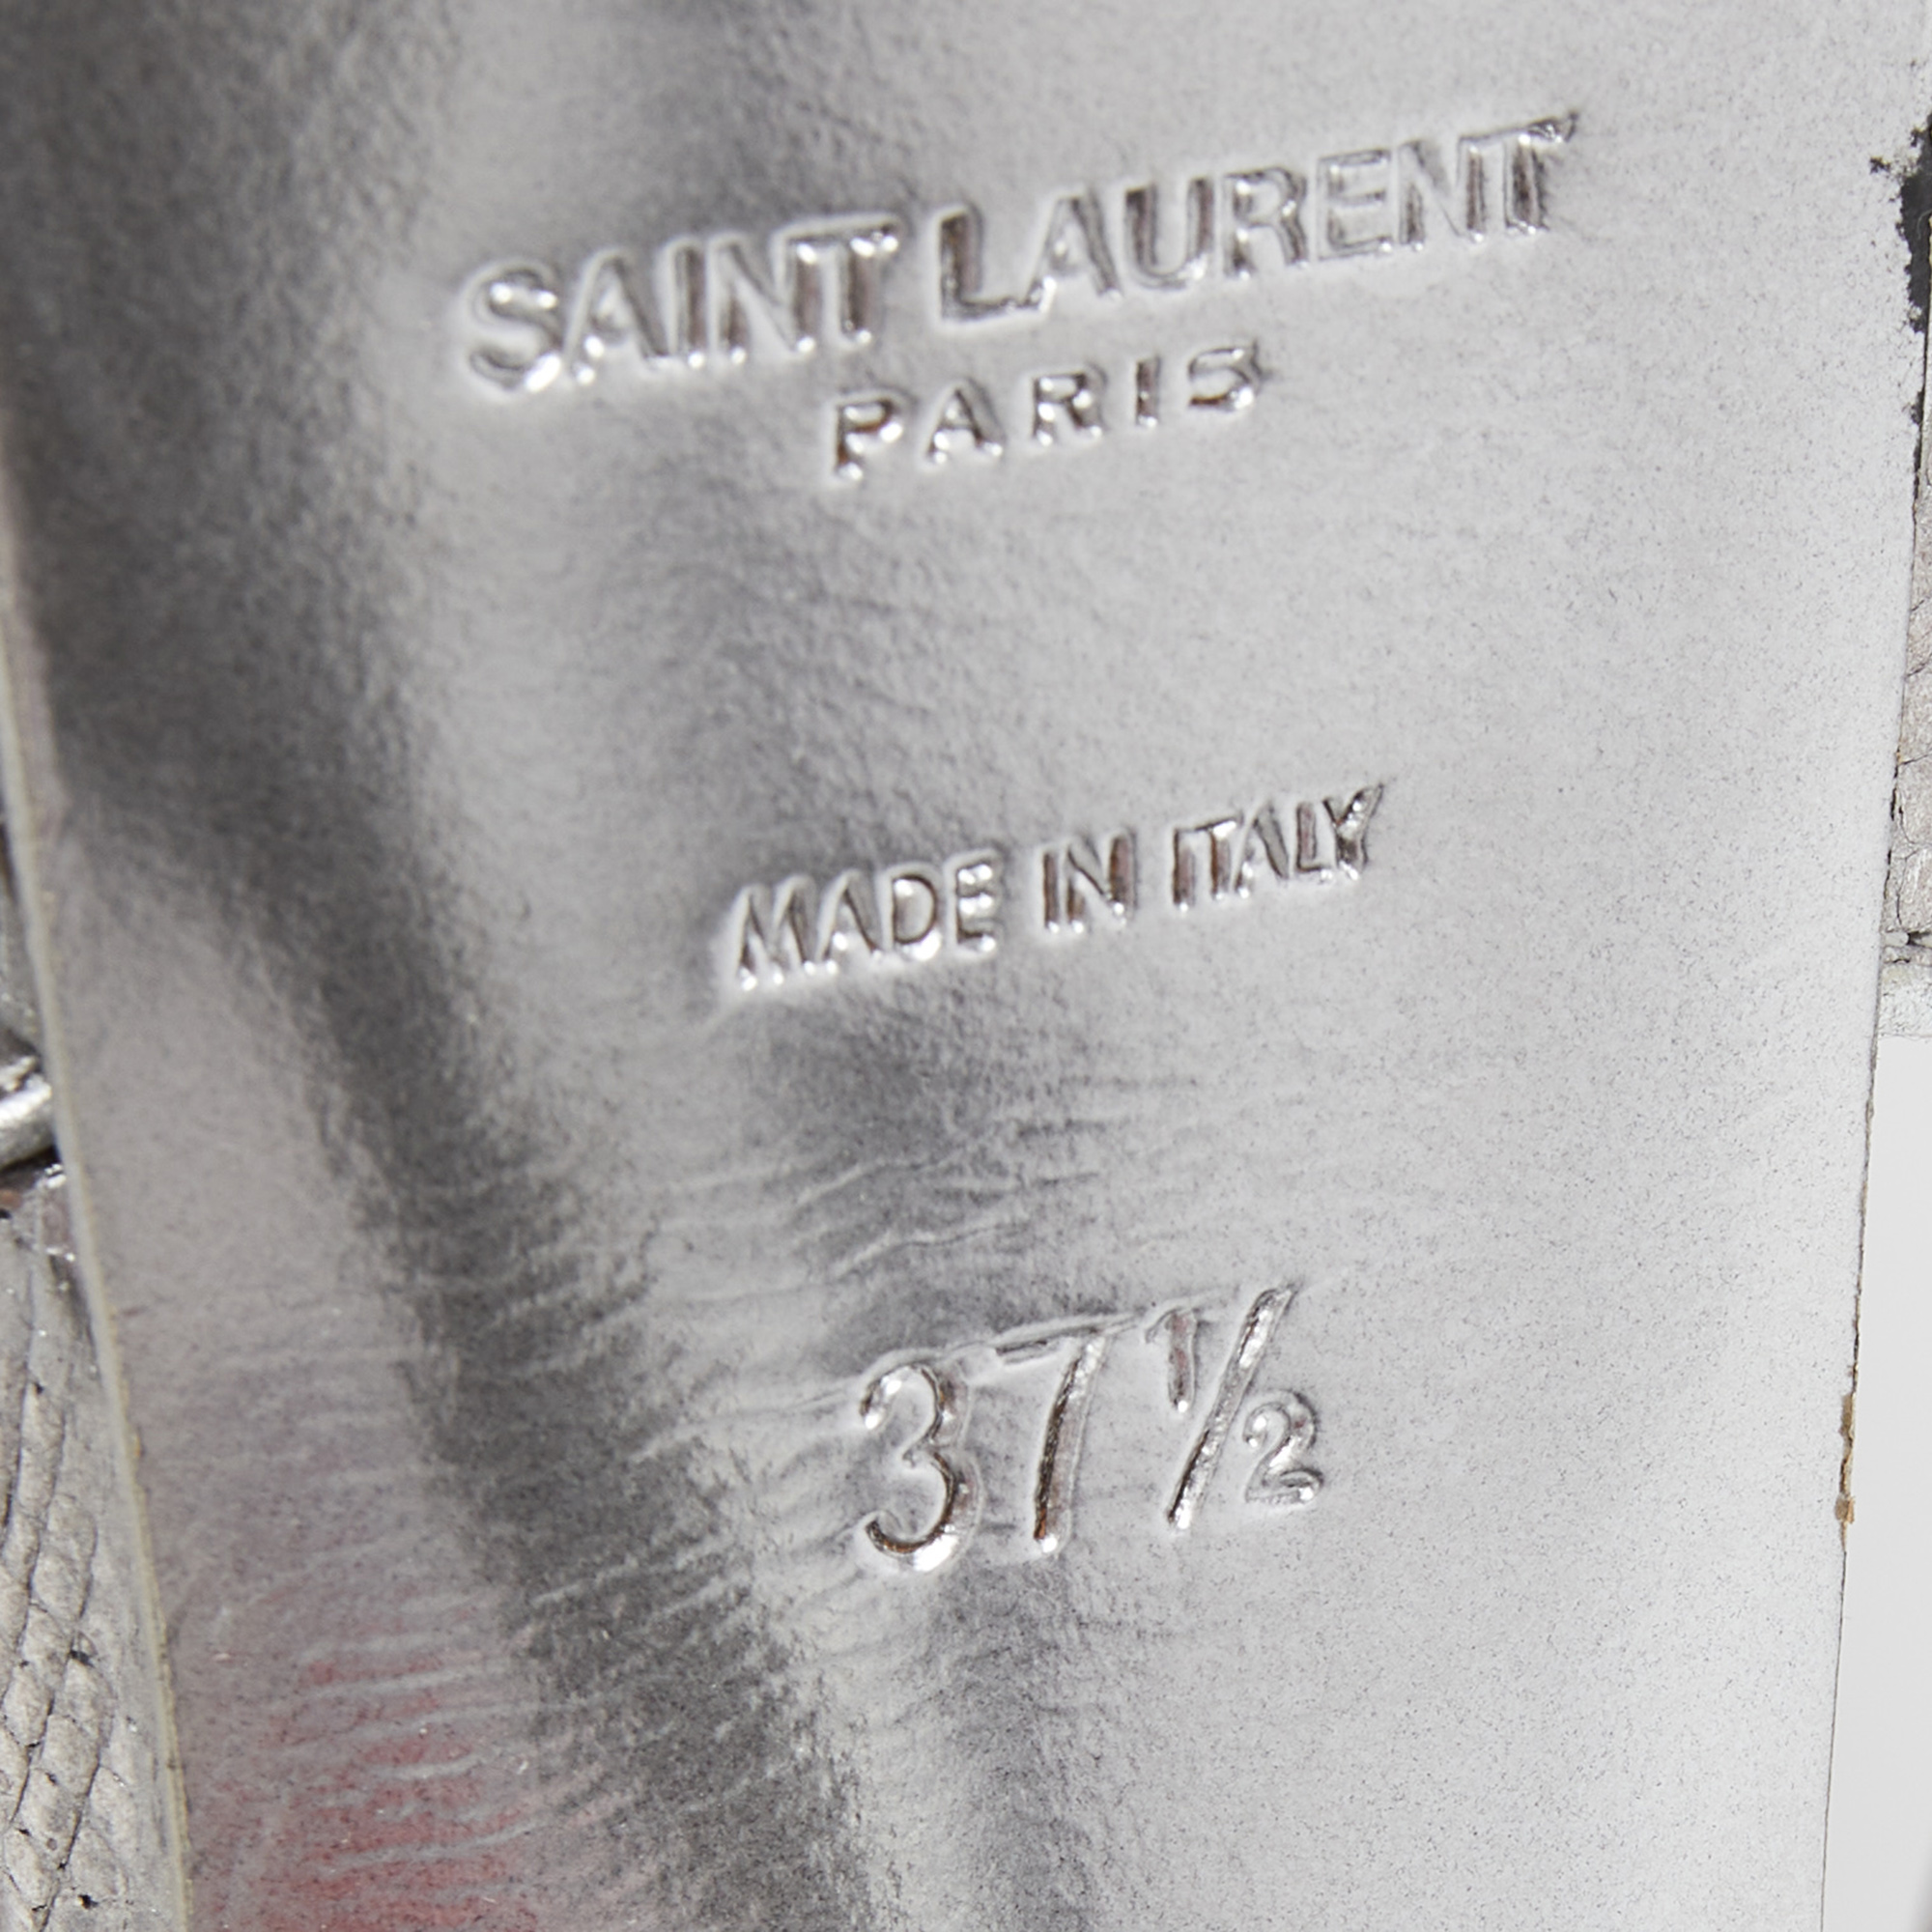 Saint Laurent Silver Textured Leather Tribute Sandals Size 37.5